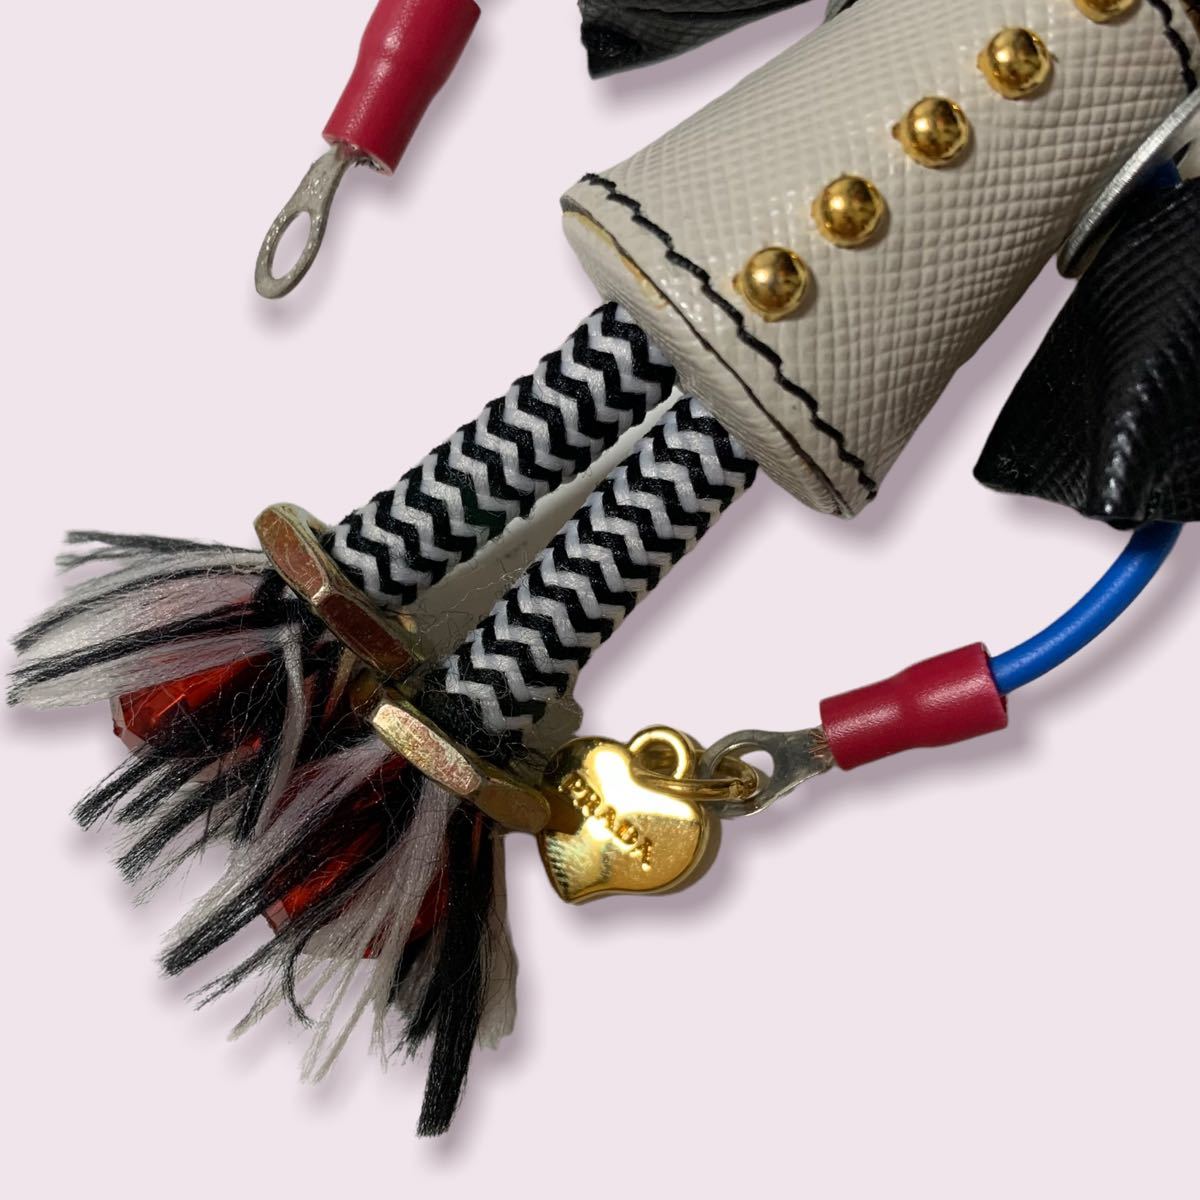 PRADA Prada bag charm puppet type key holder 